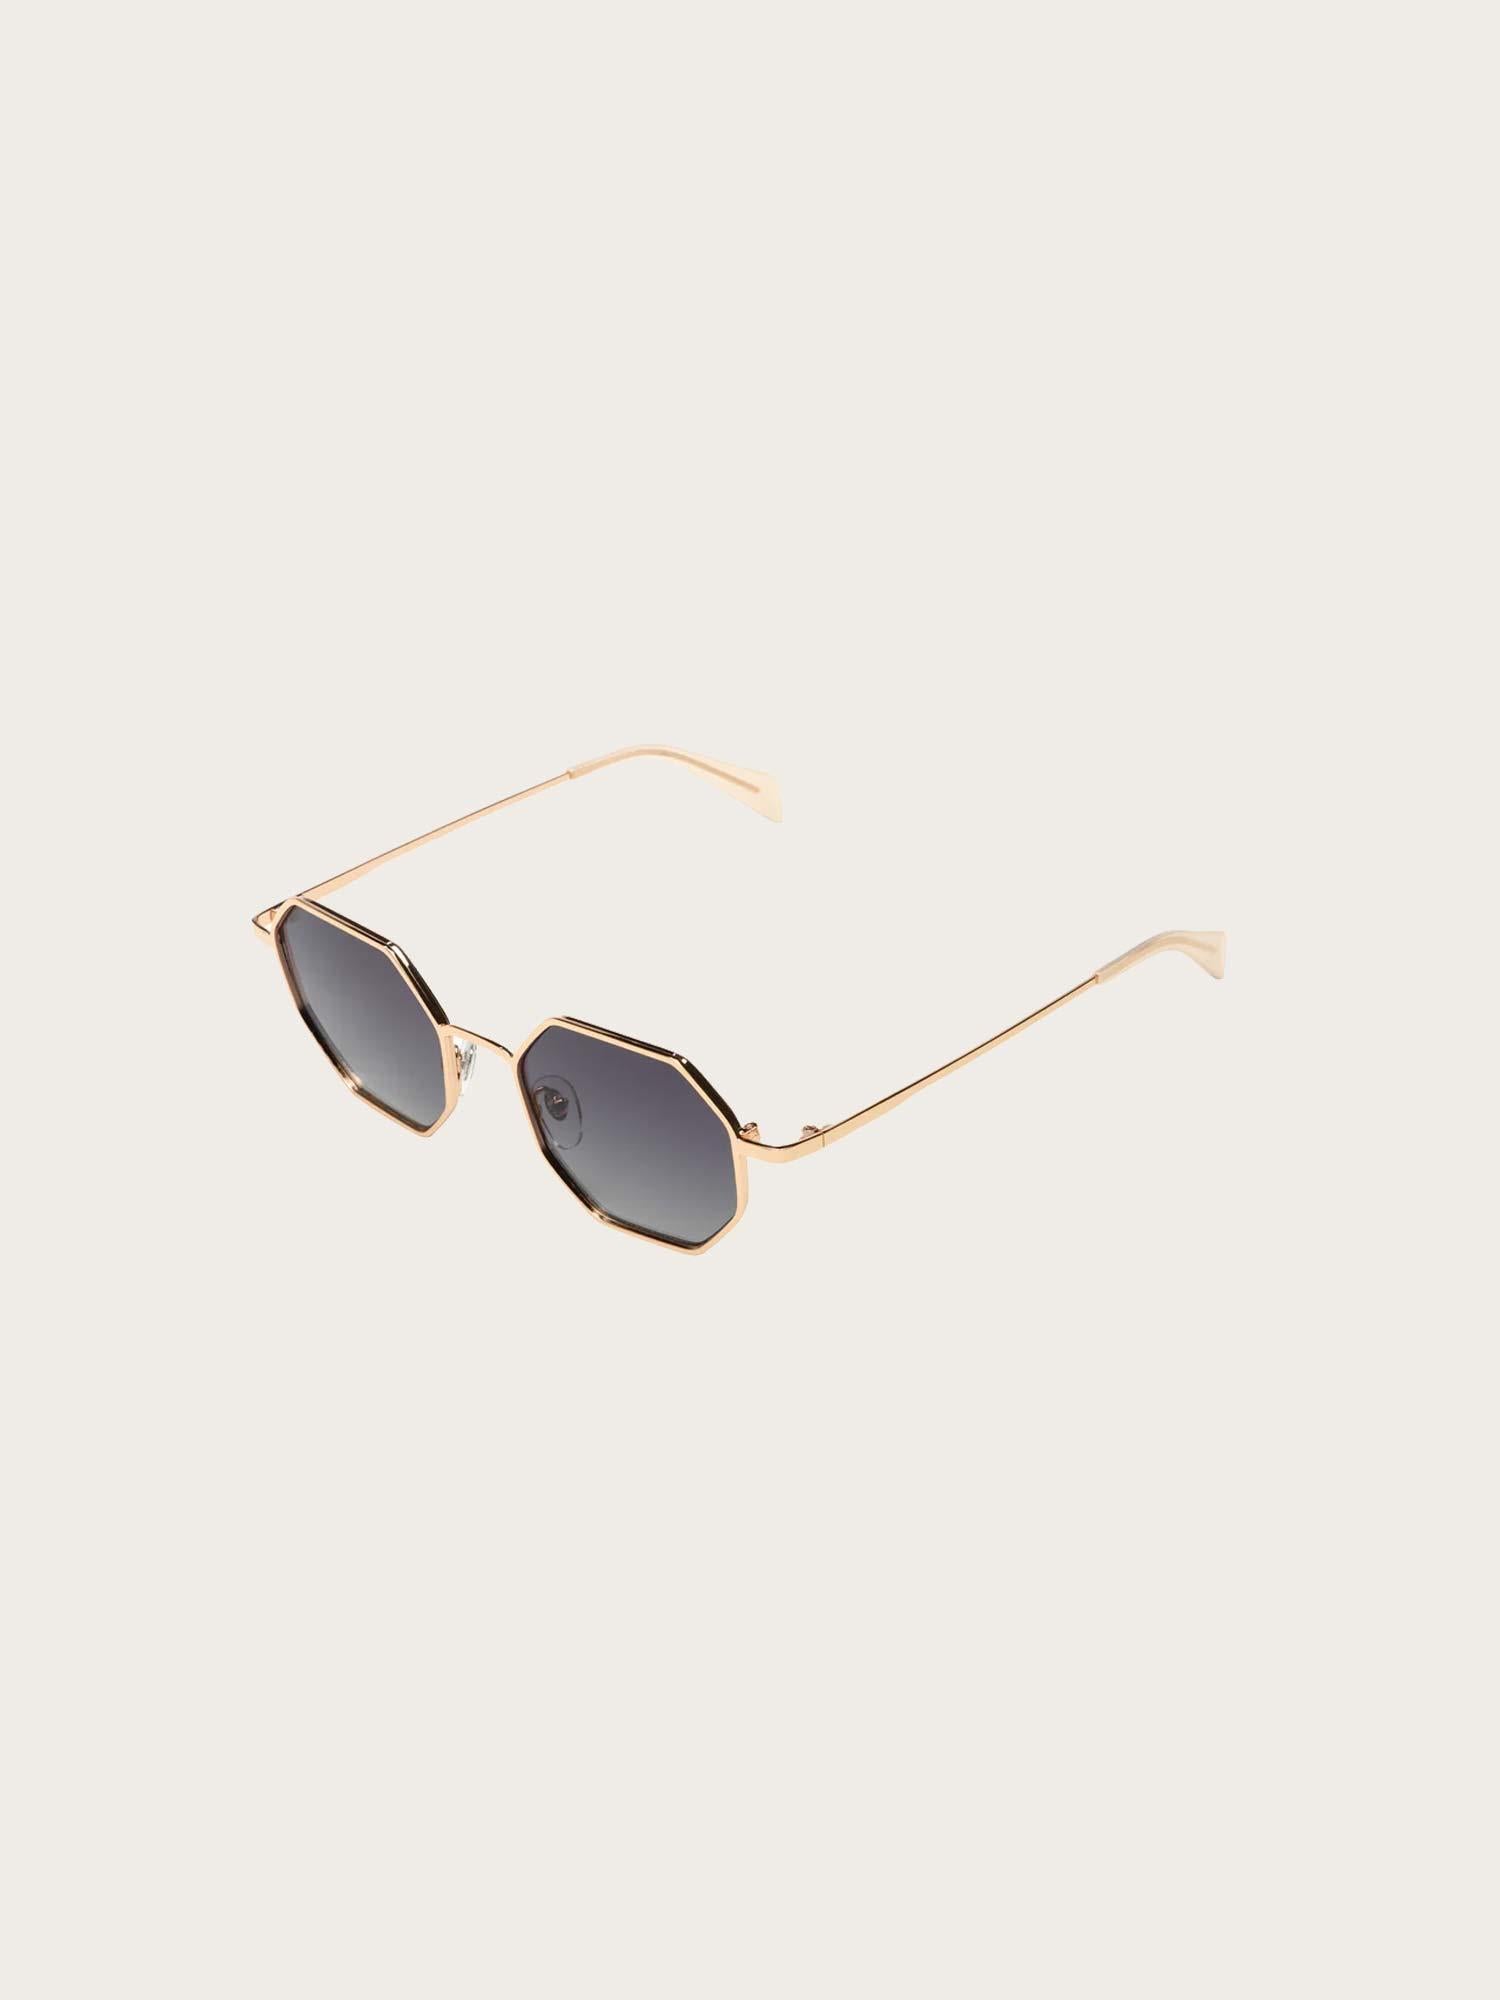 Jean Sunglasses - Rose Gold